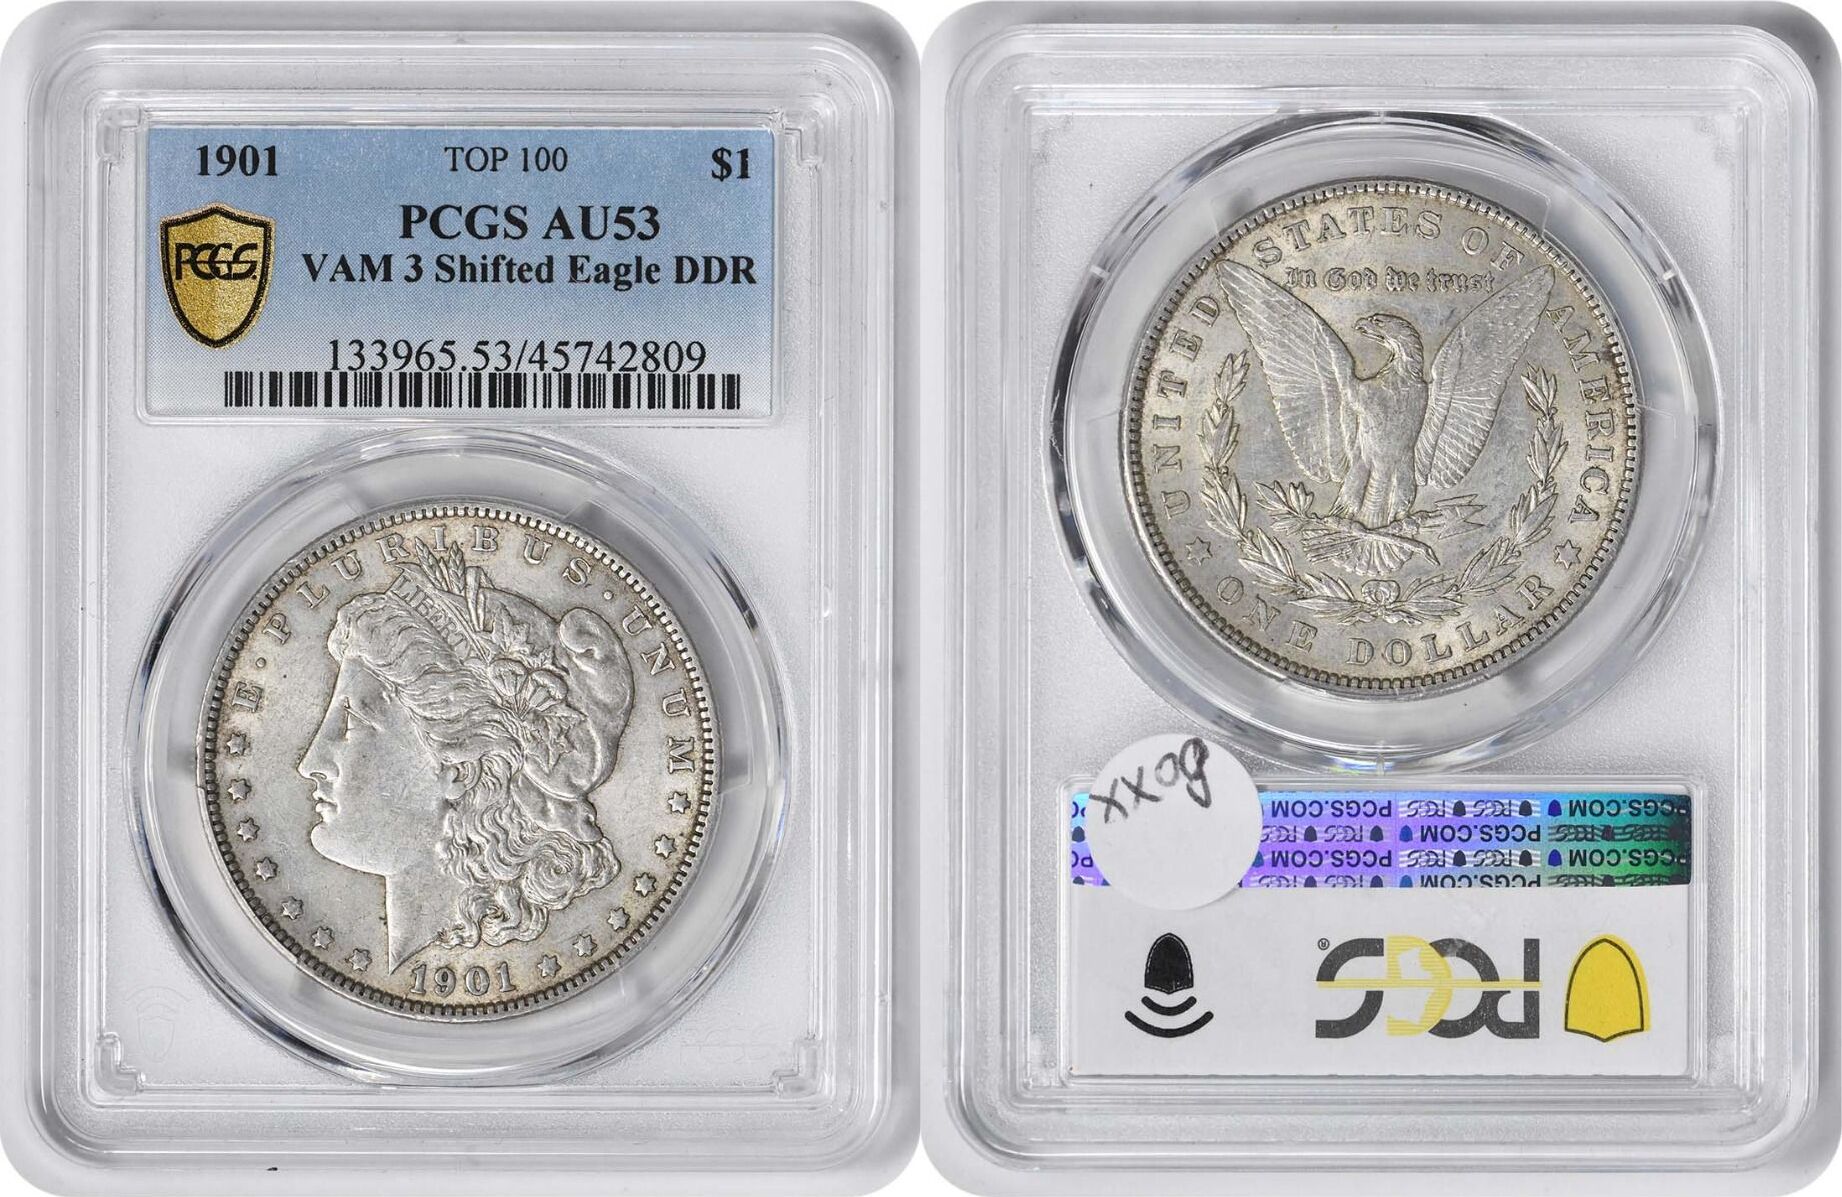 US 1901 No Mint Mark 1901 VAM 3 Morgan Dollar Shifted Eagle AU53 PCGS ...